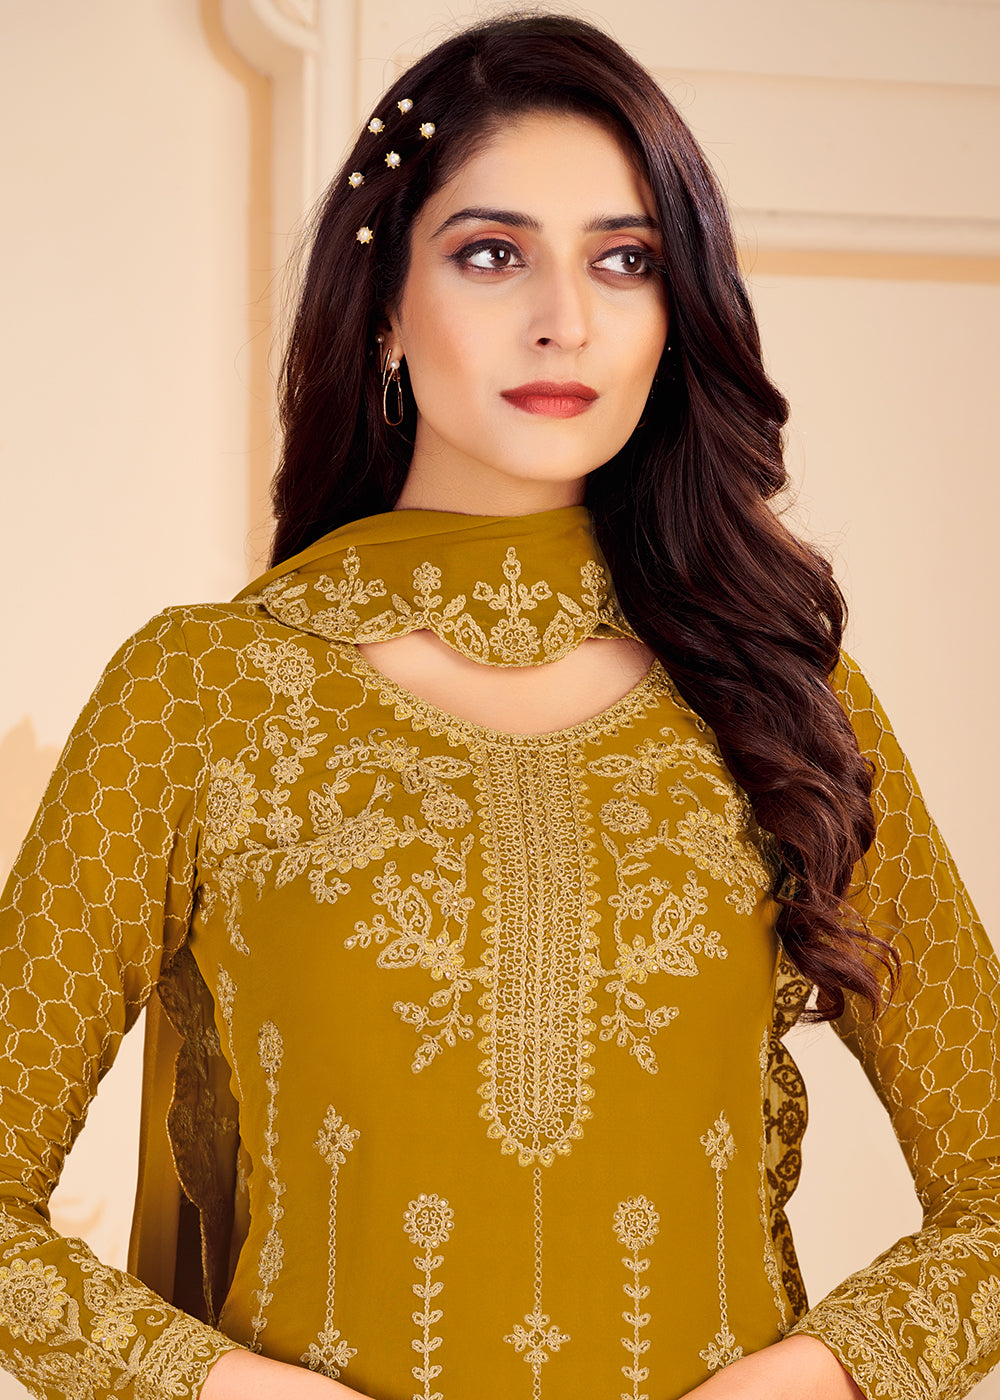 Buy Now Trendy Mustard Georgette Eid Wear Salwar Kurta Suit Online in USA, UK, Canada & Worldwide at Empress Clothing.